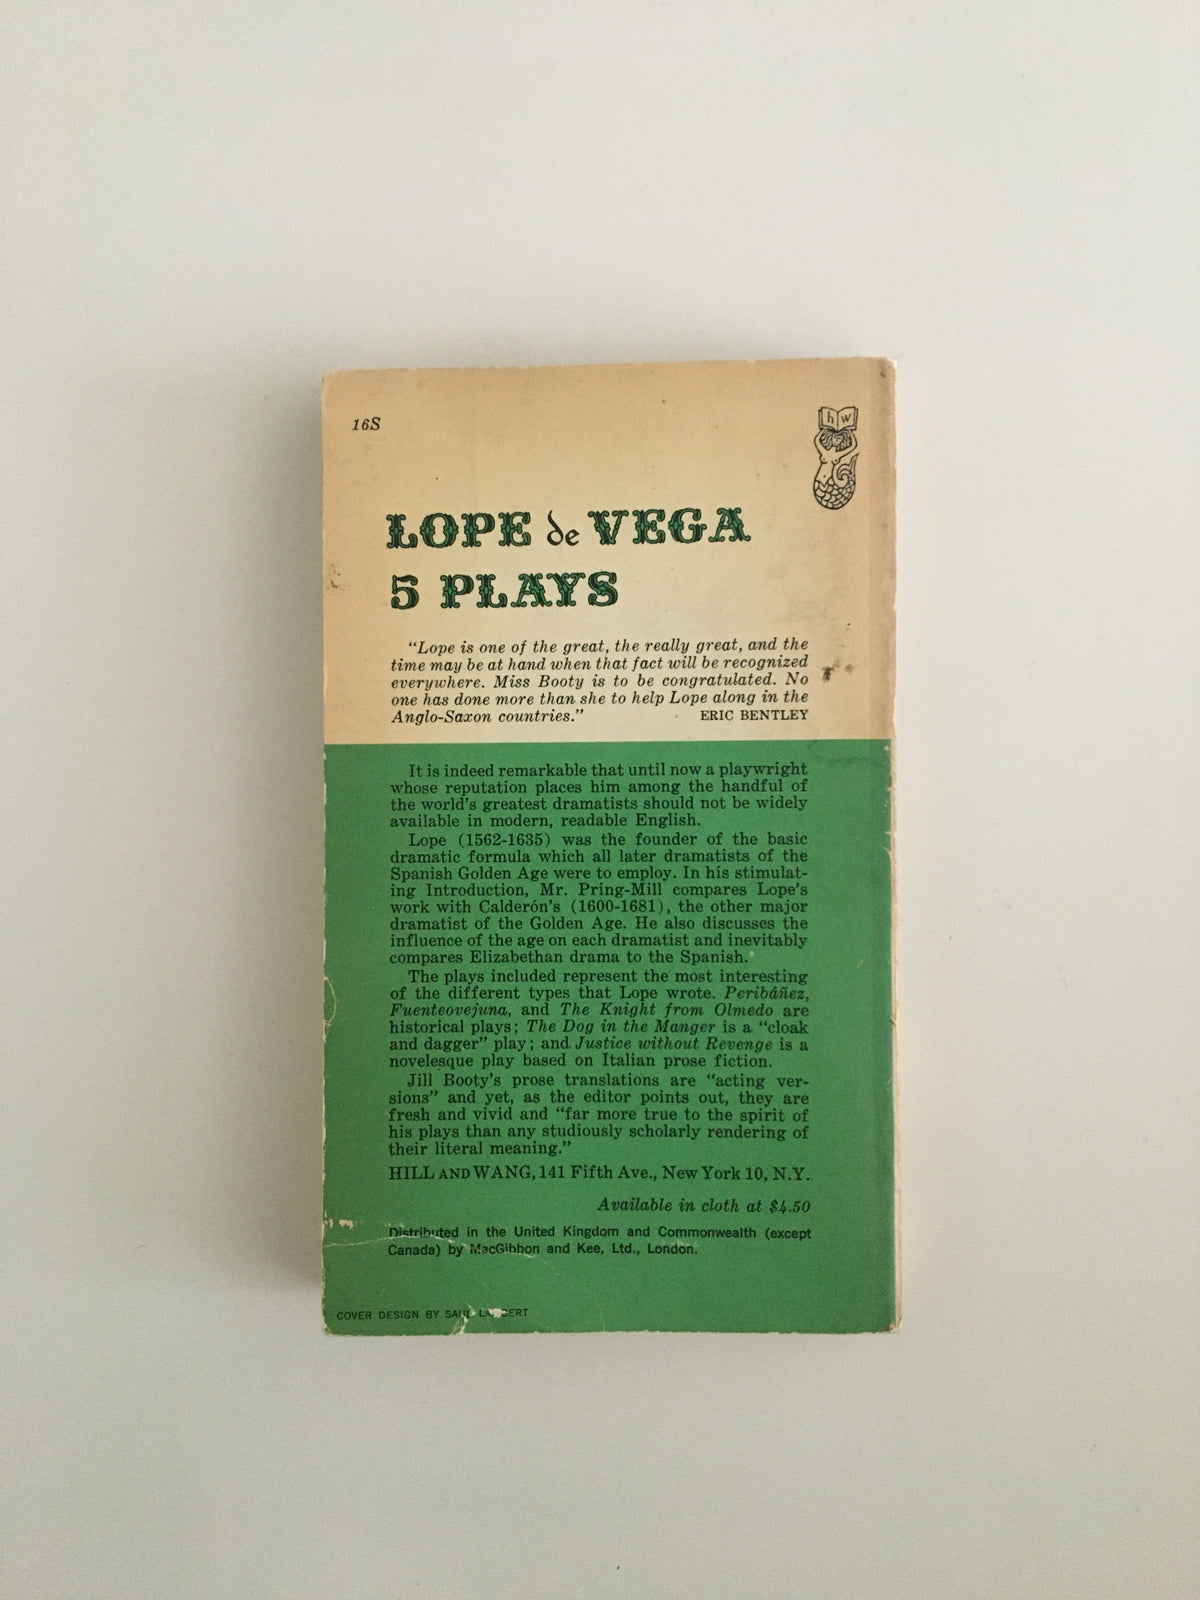 5 Plays by Lope de Vega